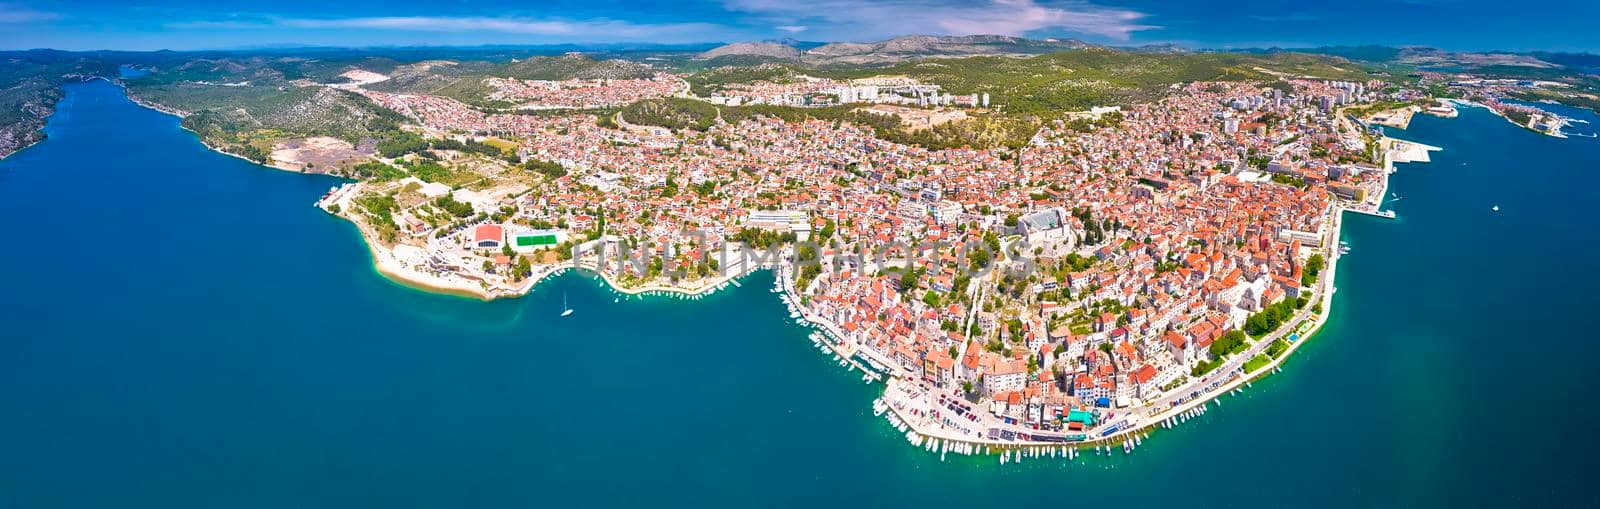 Town of Sibenik waterfront aerial panoramic view, UNESCO world heritage site in Dalmatia region of Croatia